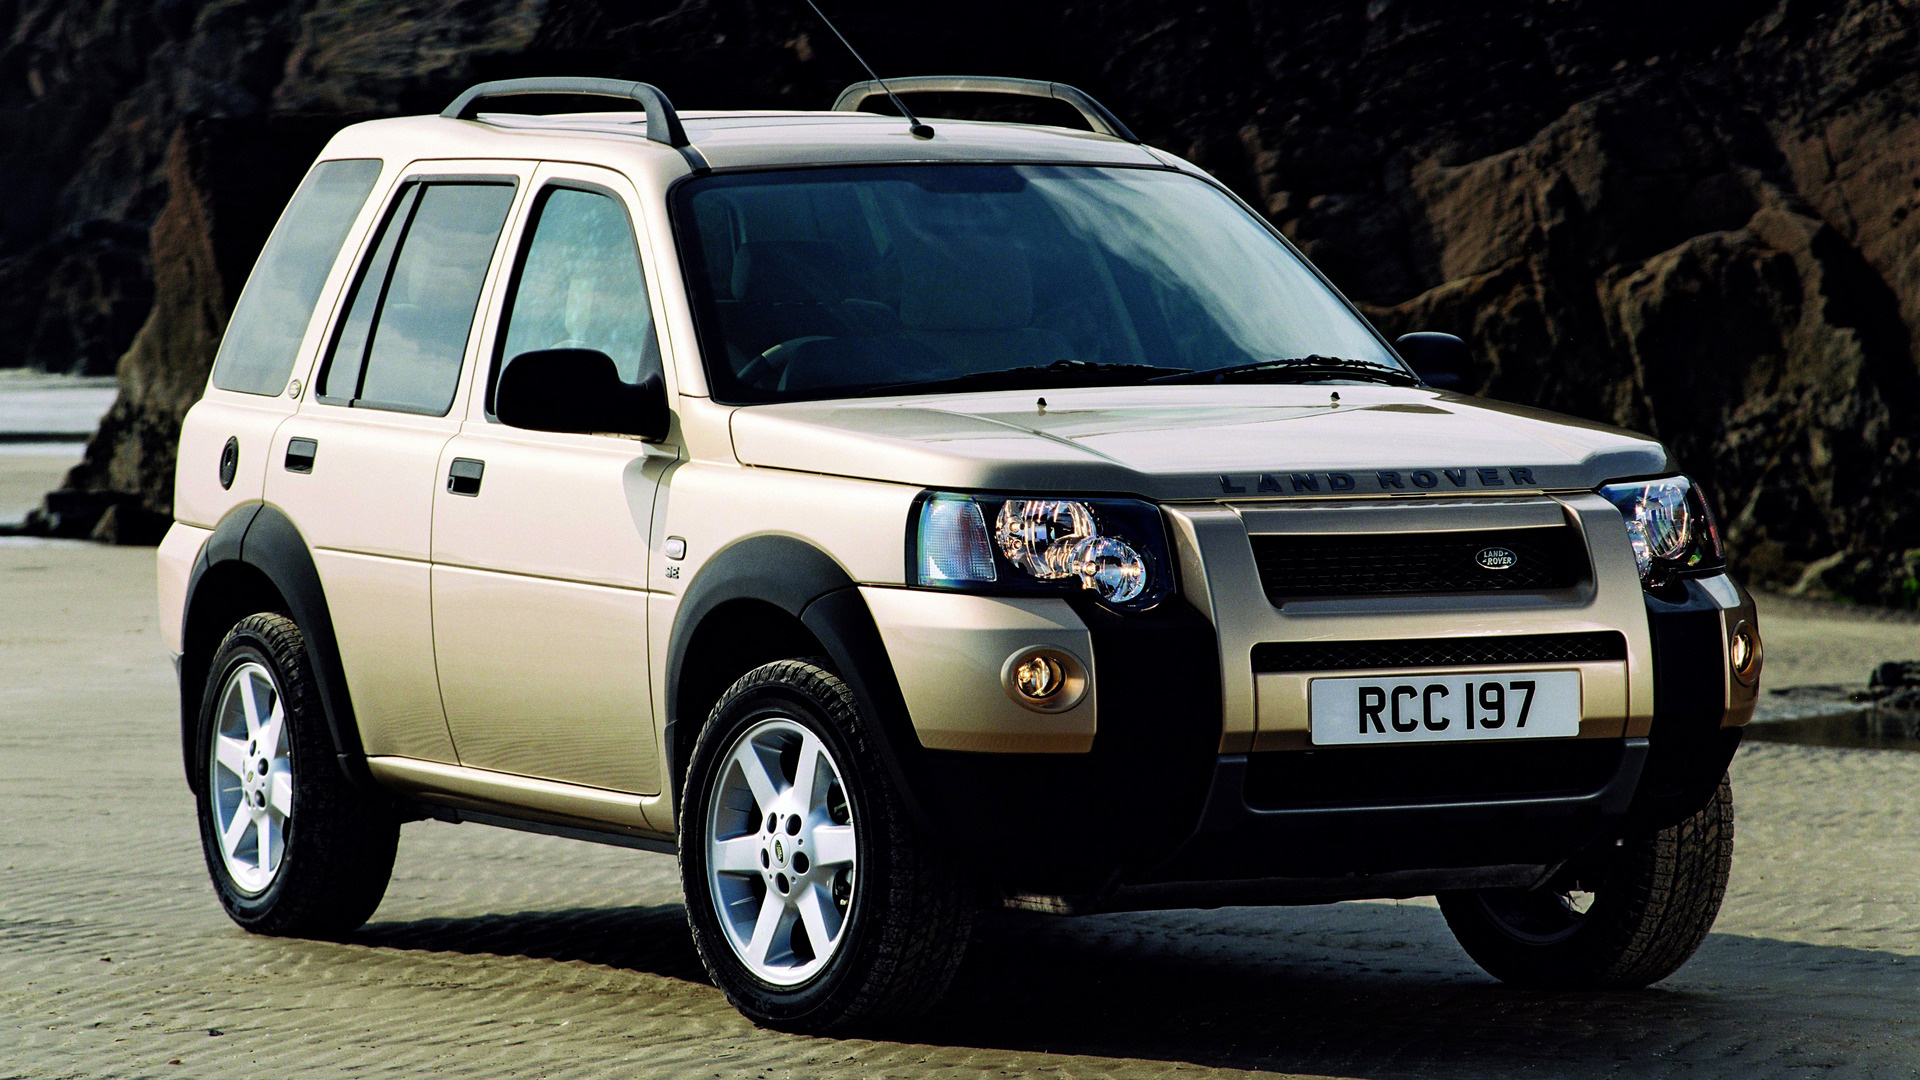 2003 Land Rover Freelander SE (UK) Wallpapers and HD